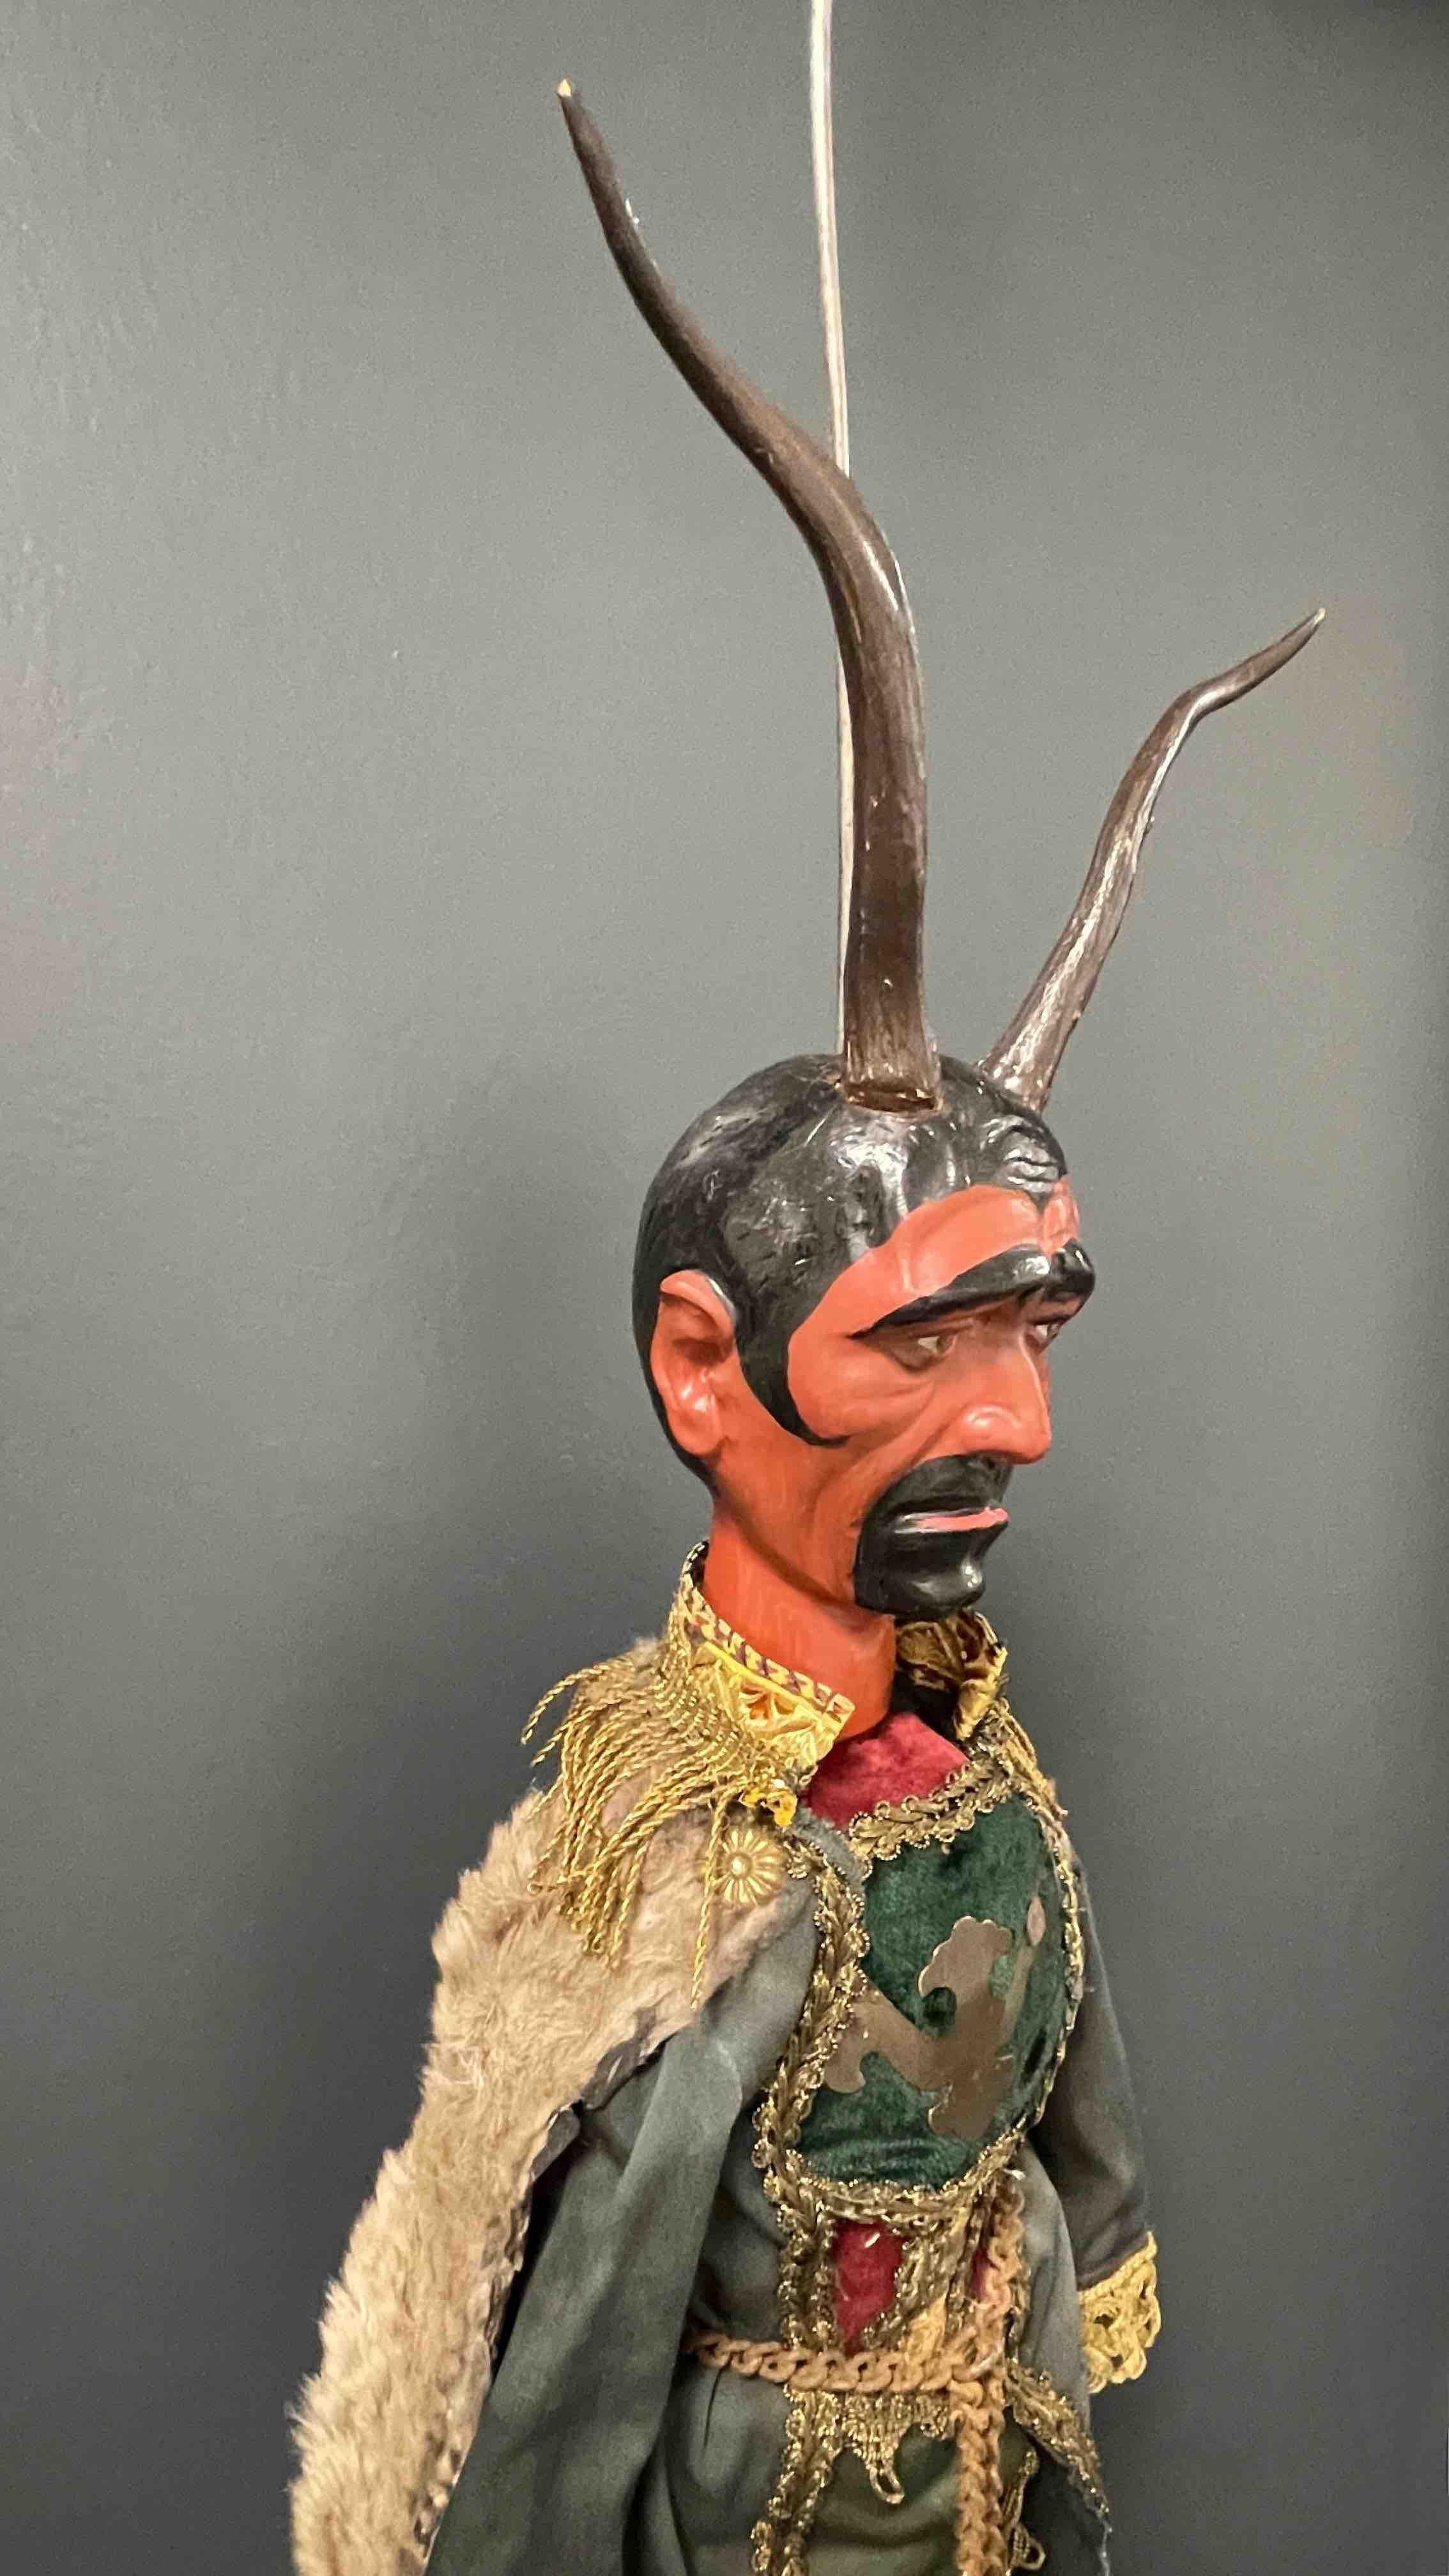 Austrian Large Devil or Krampus Marionette by a Master Puppet Maker, Antique Austria For Sale